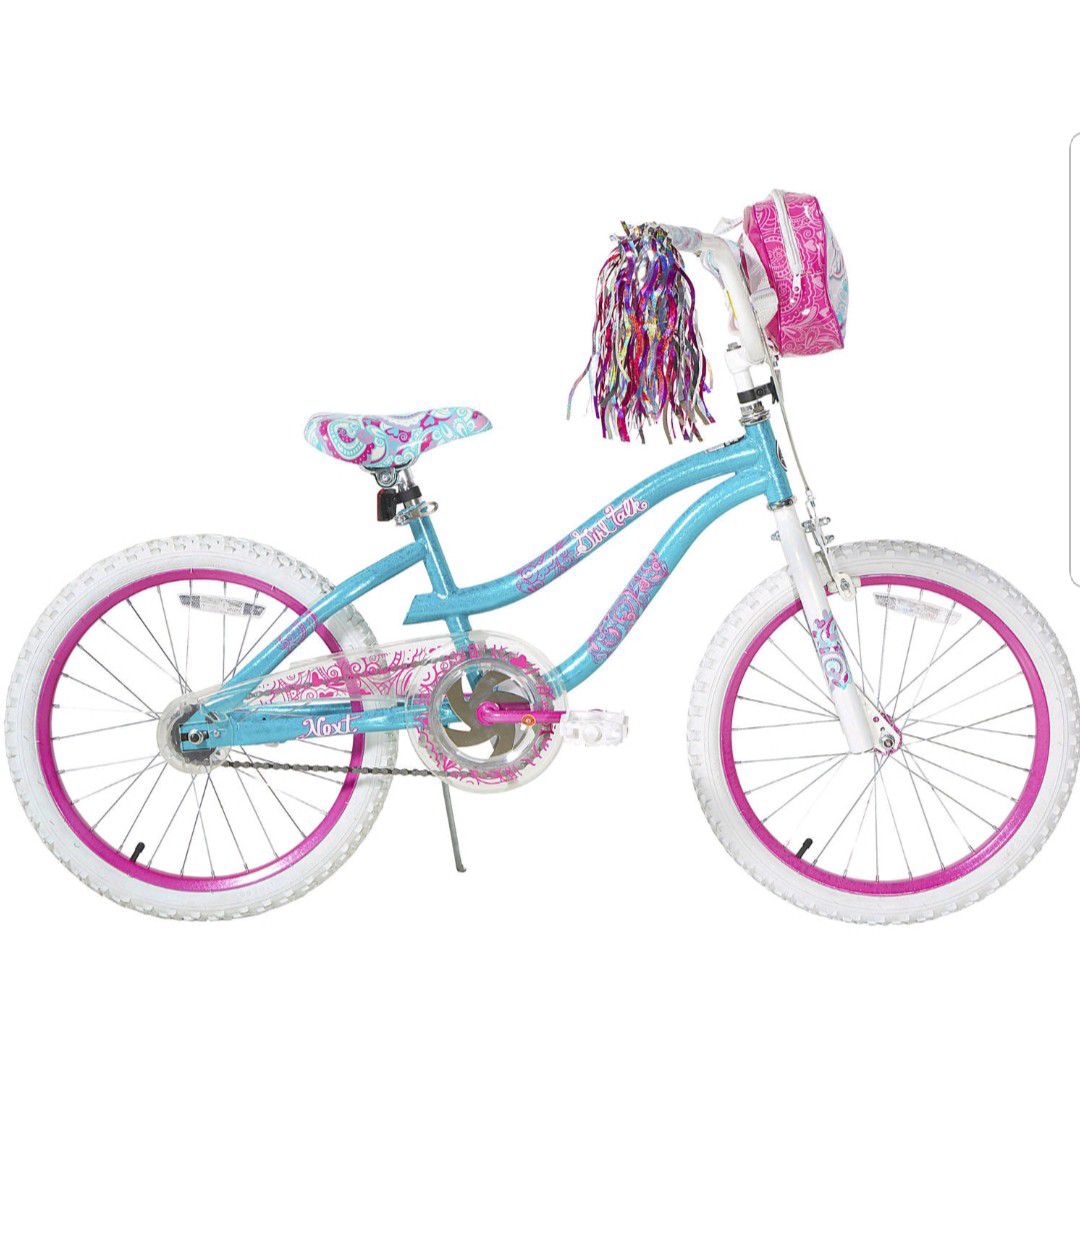 New 20" girls bike